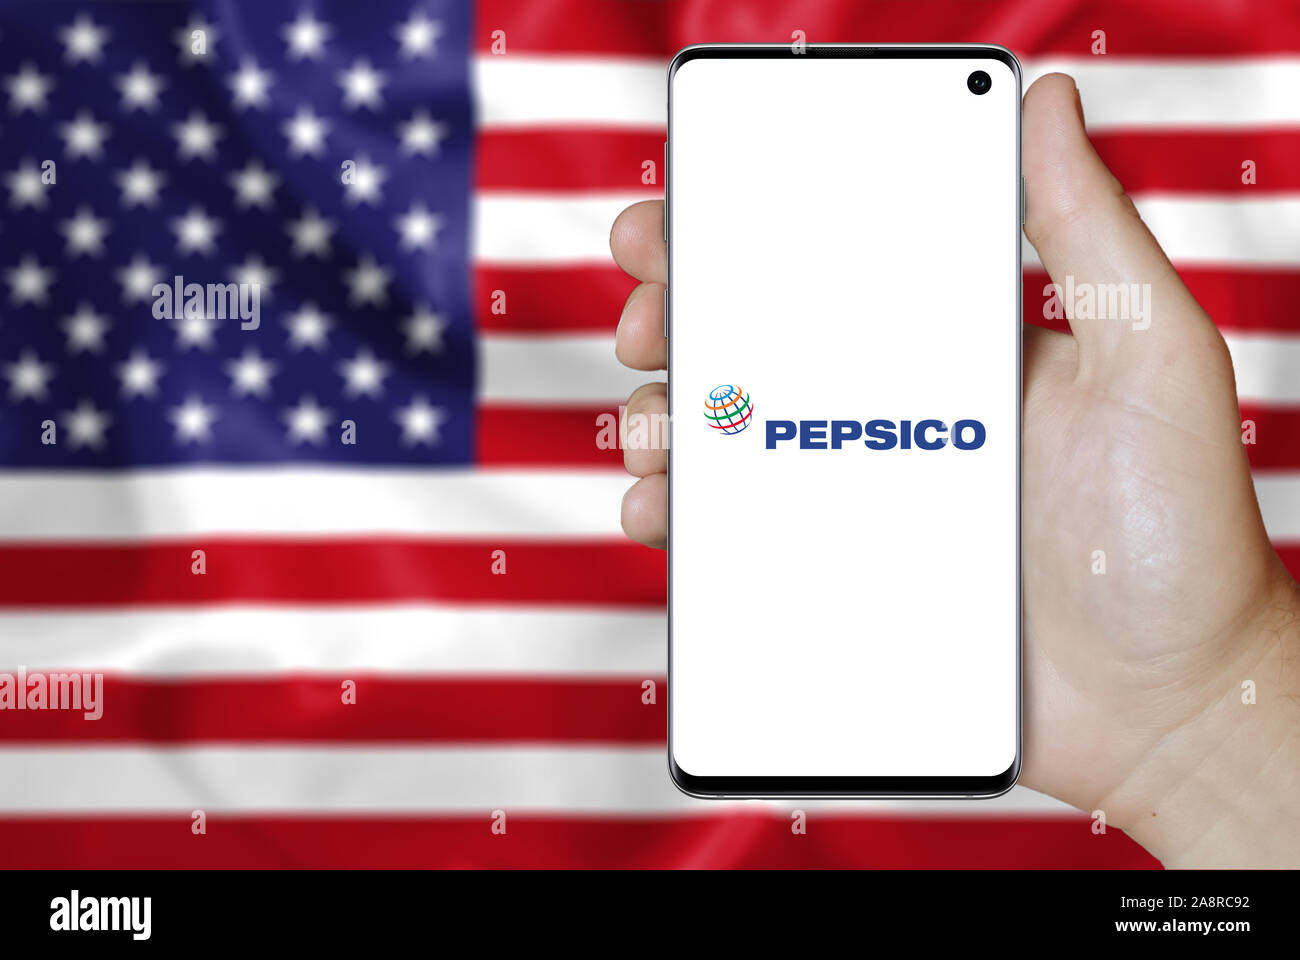 Logo of public company PepsiCo Inc. displayed on a smartphone. Flag of USA background. Credit: PIXDUCE Stock Photo